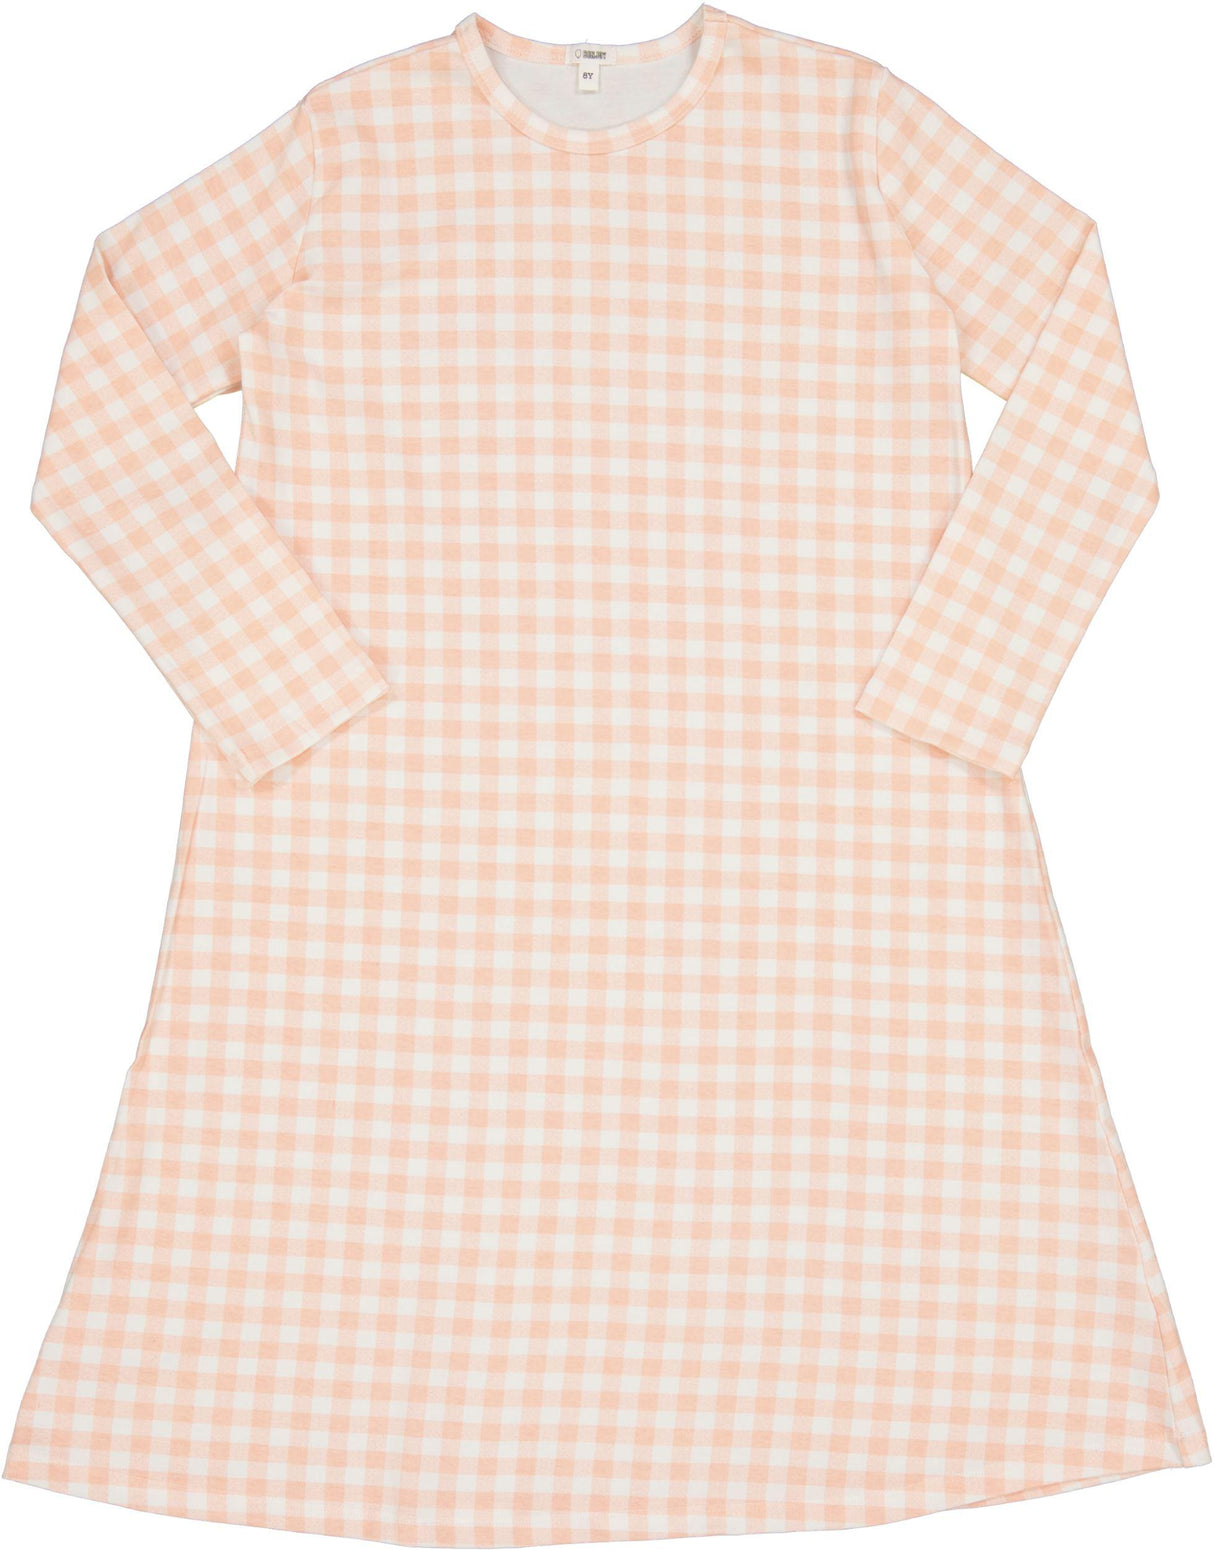 Bonjoy Girls Gingham Cotton Nightgown - A4B